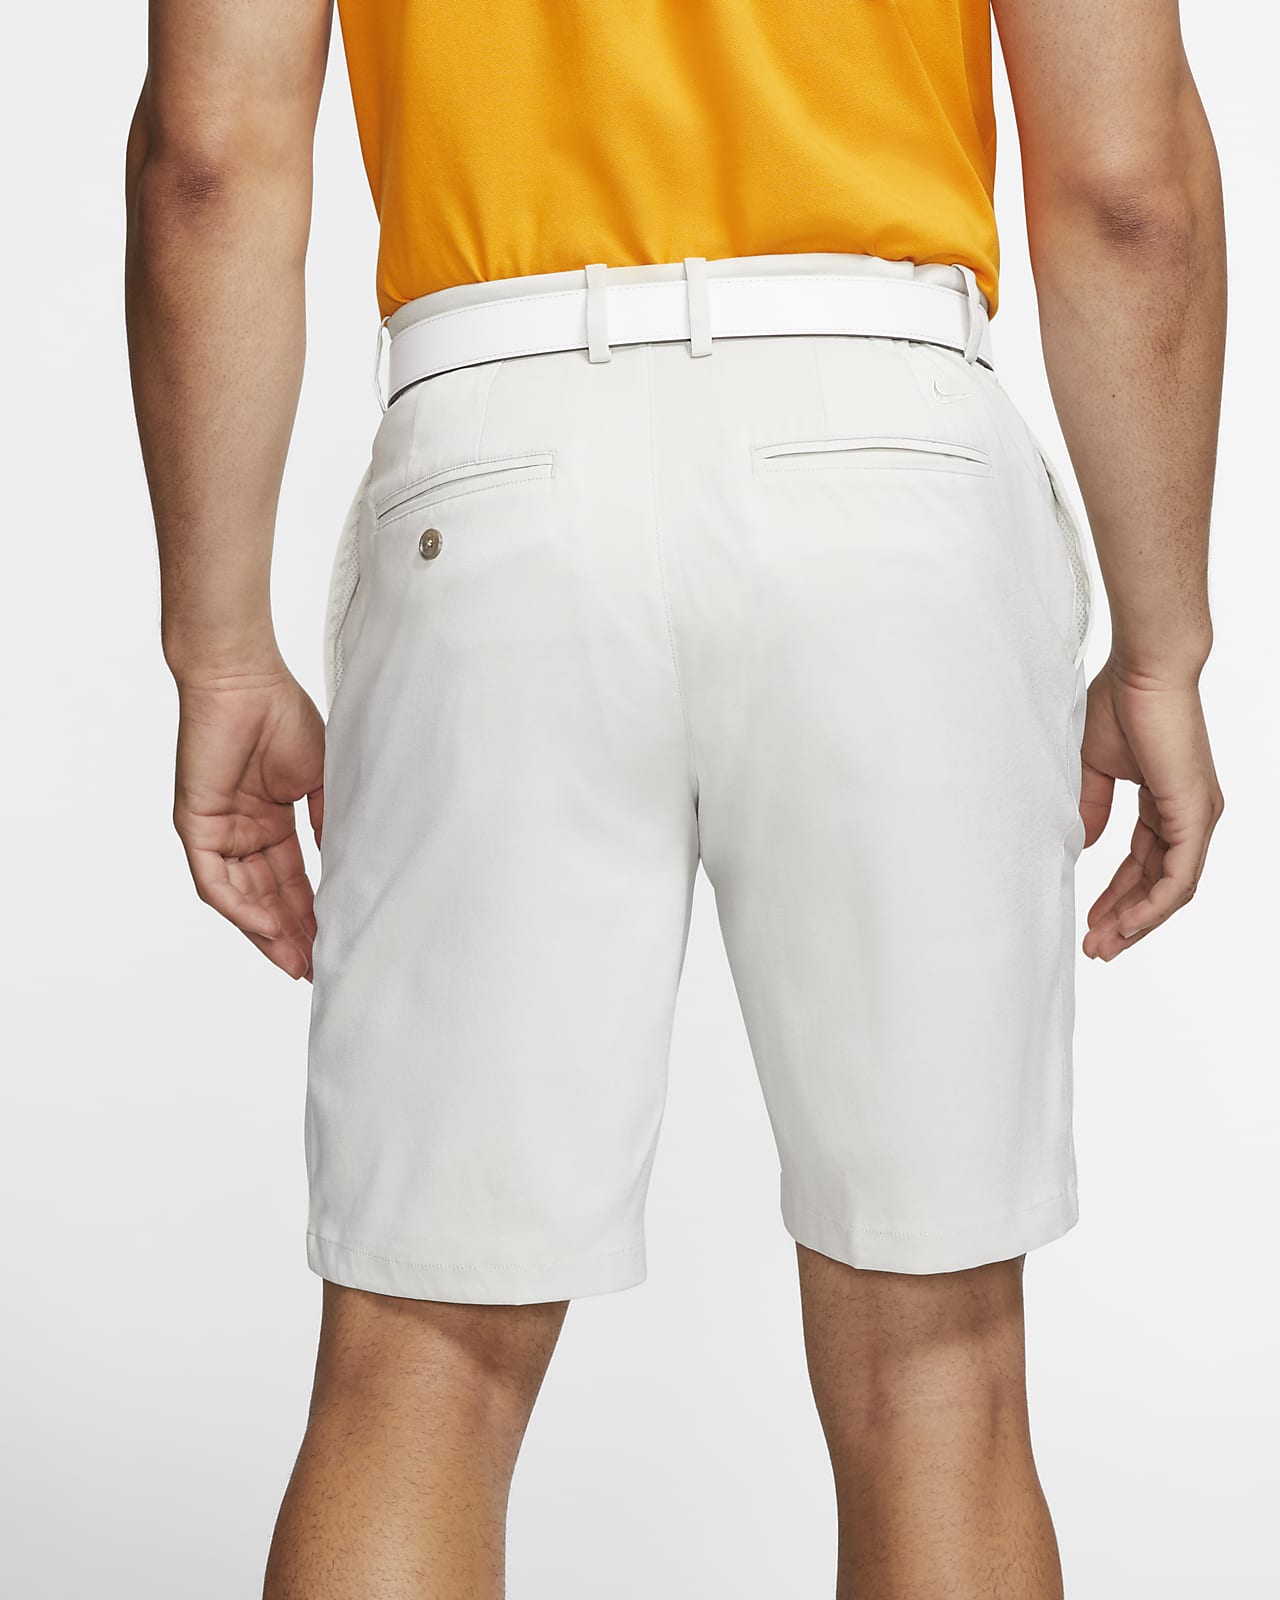 Nike Men's Flex 2.0 Shorts - Sequoia / Black